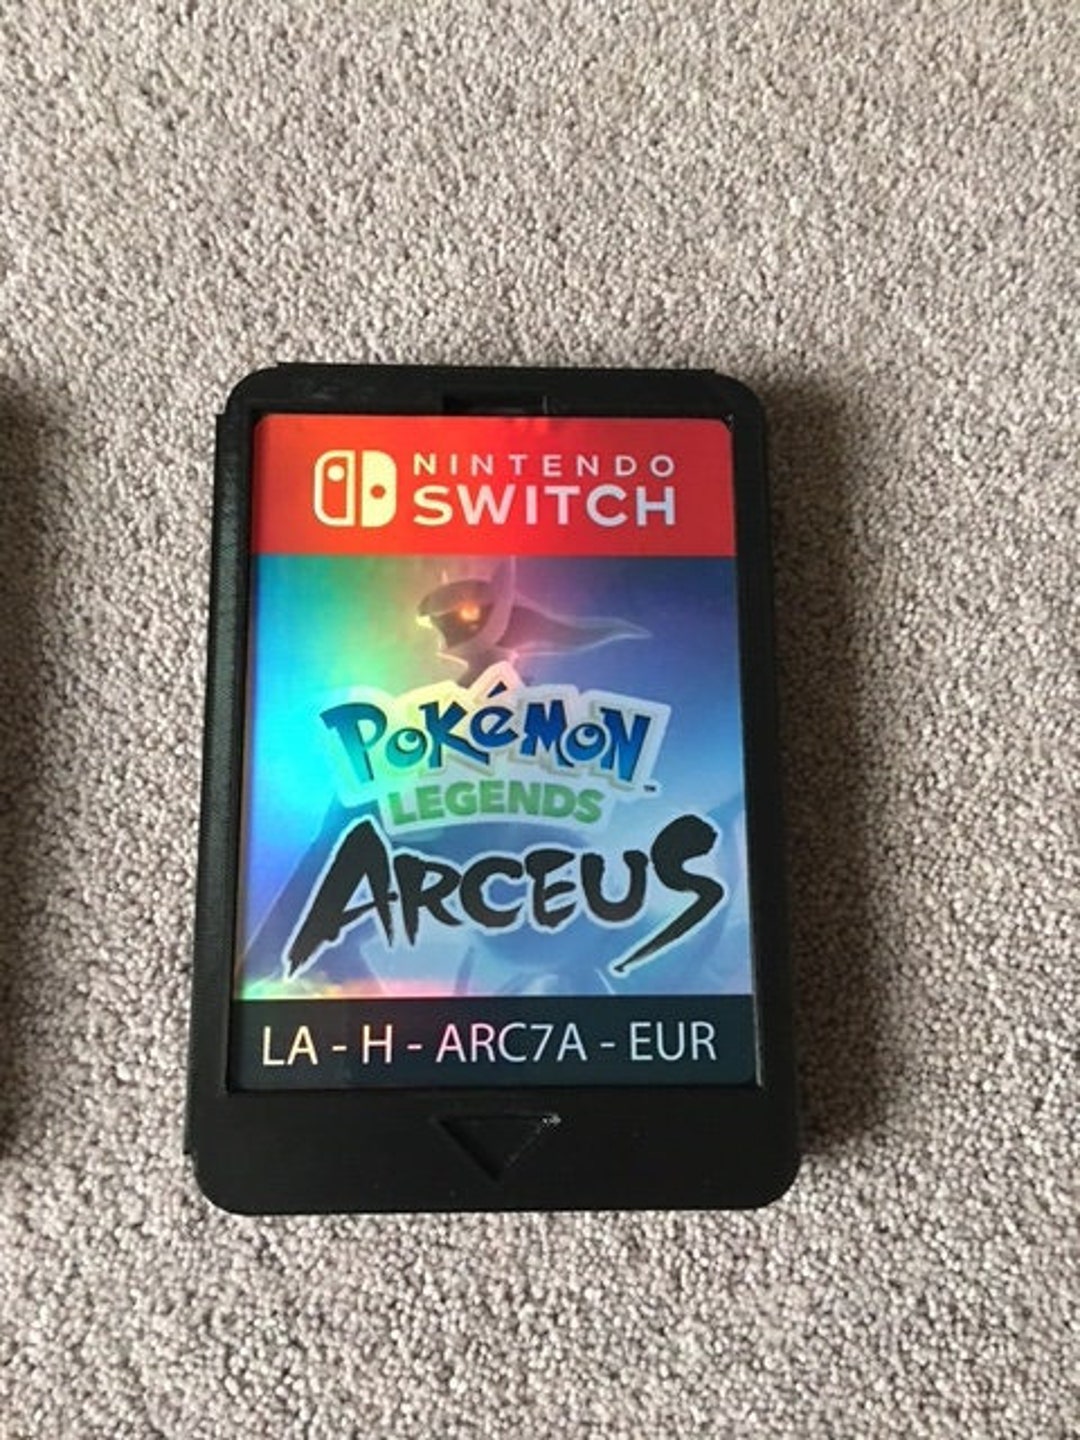 Pokemon Legends Arceus - Nintendo Switch Game Deals - Games Physical  Cartridge